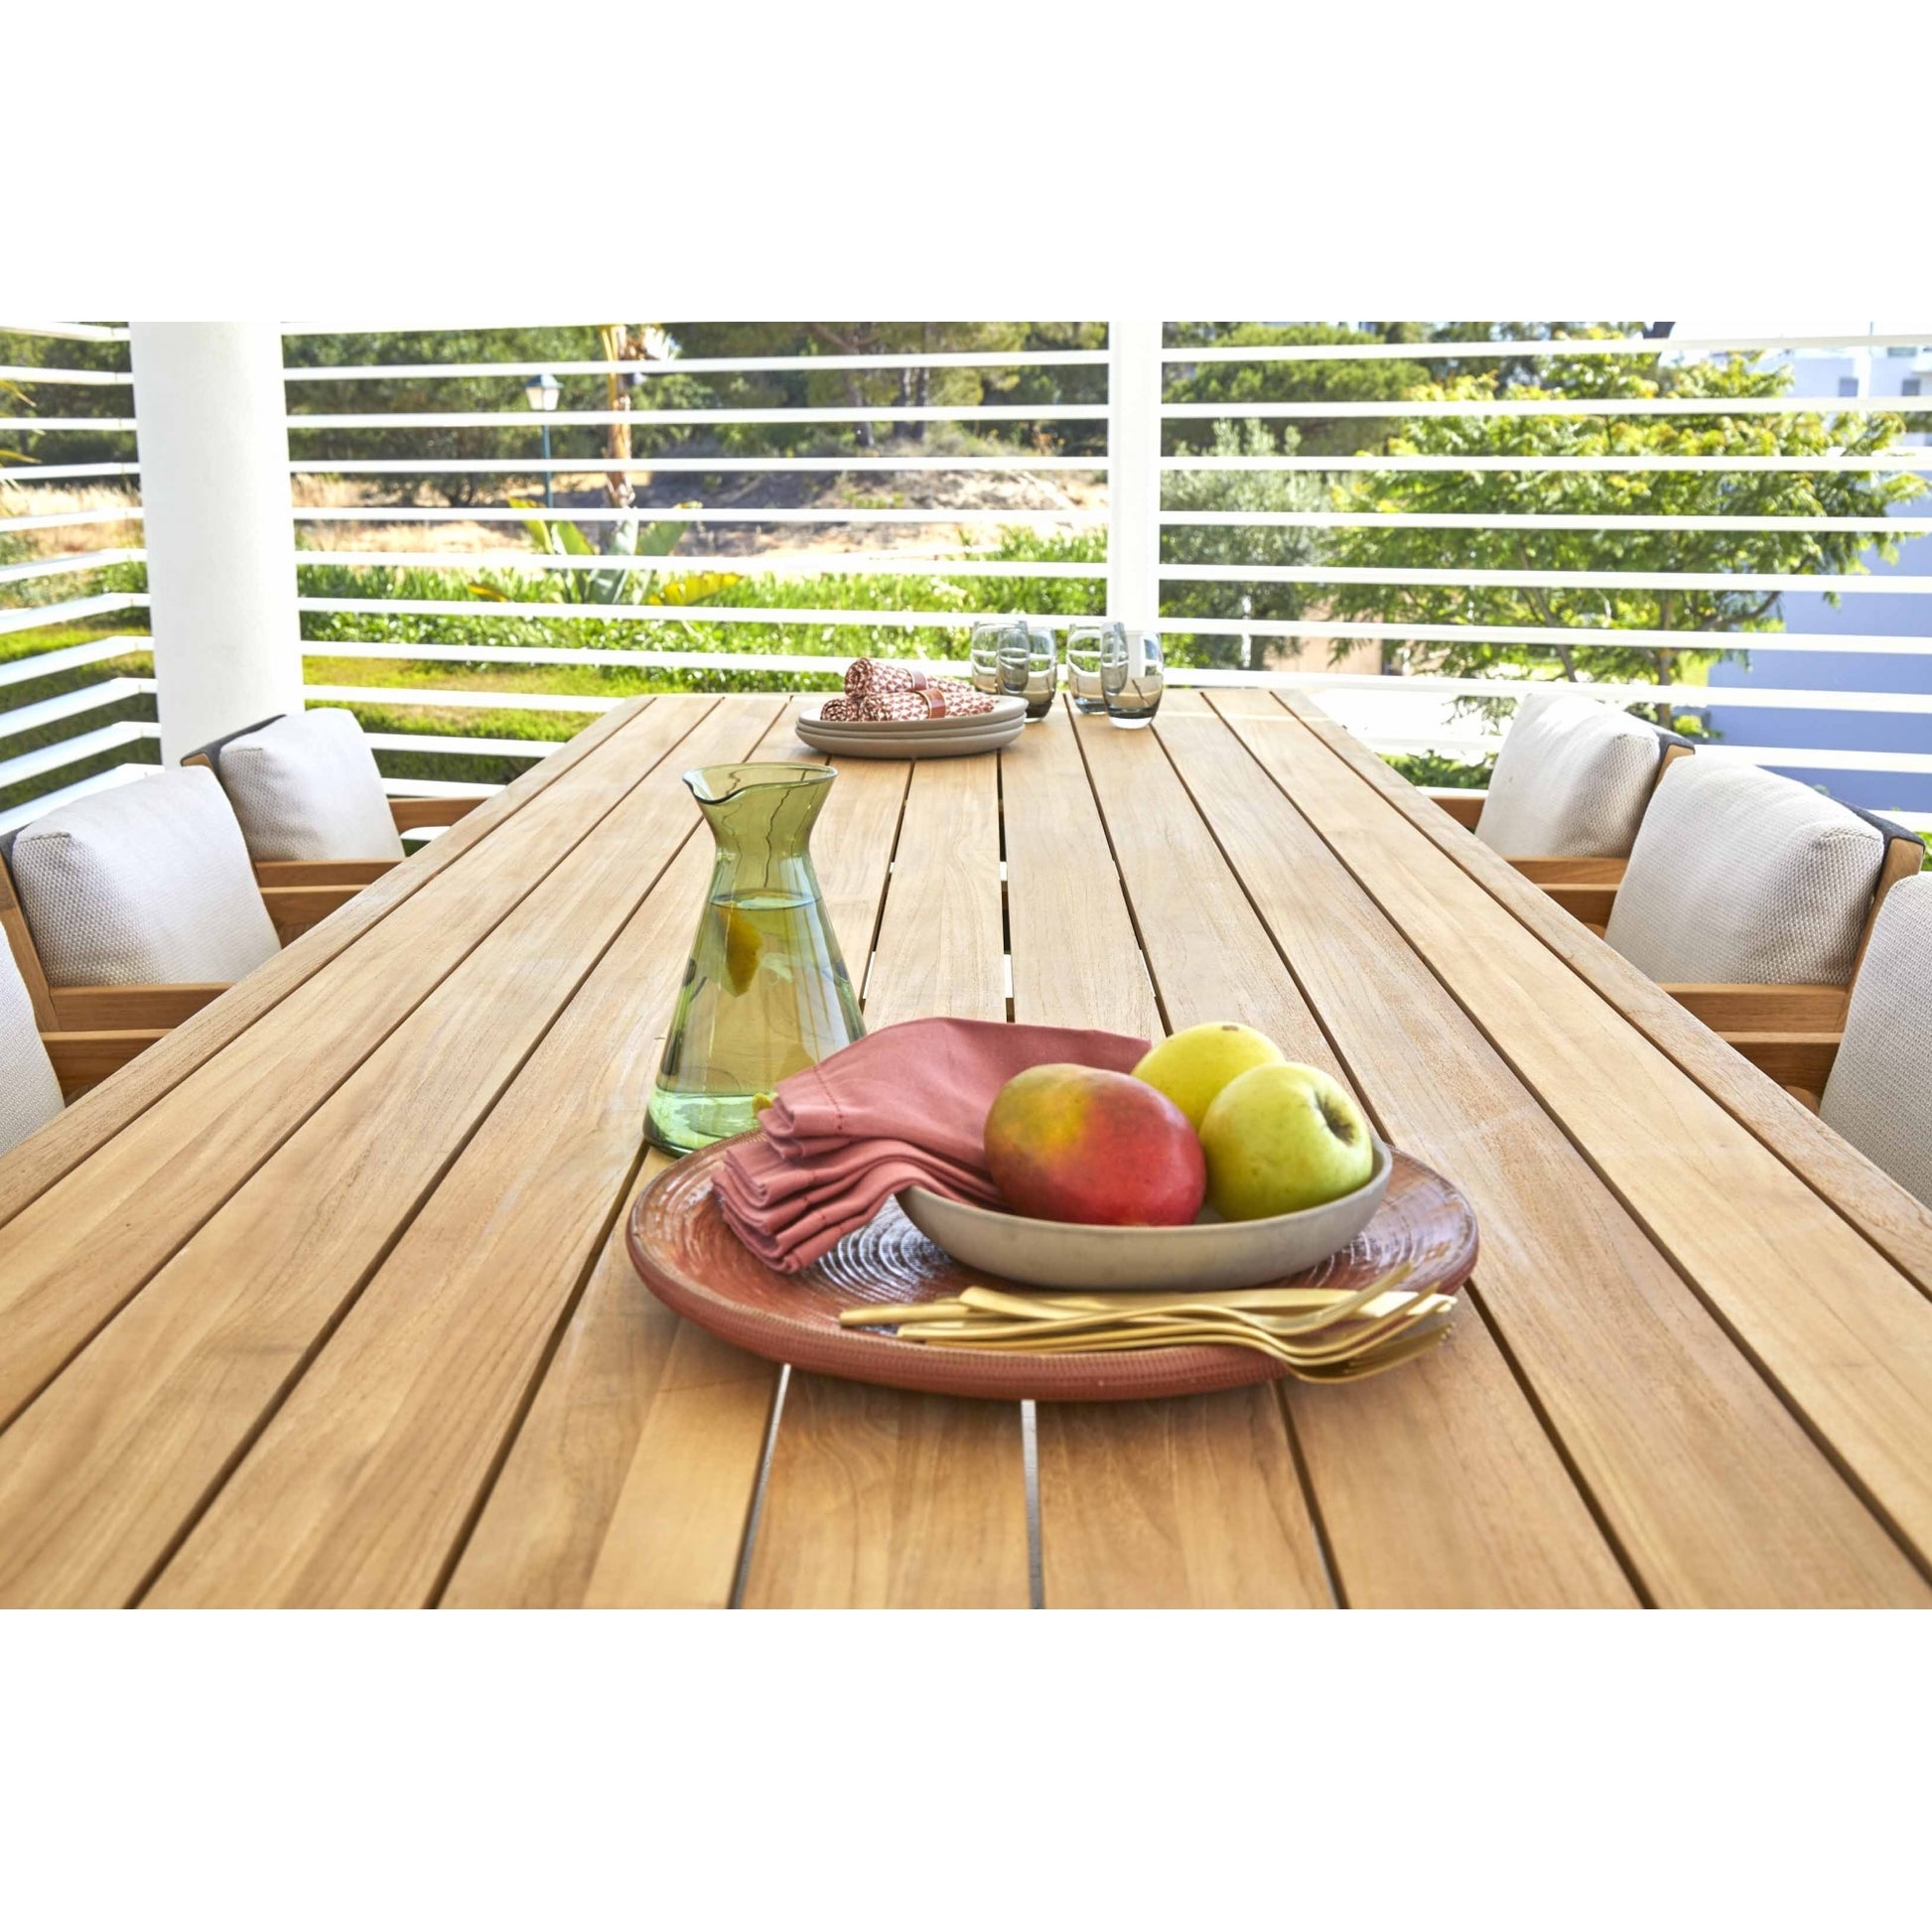 Flexx Dining Table - PadioLiving - Flexx Dining Table - Outdoor Dining Table - PadioLiving